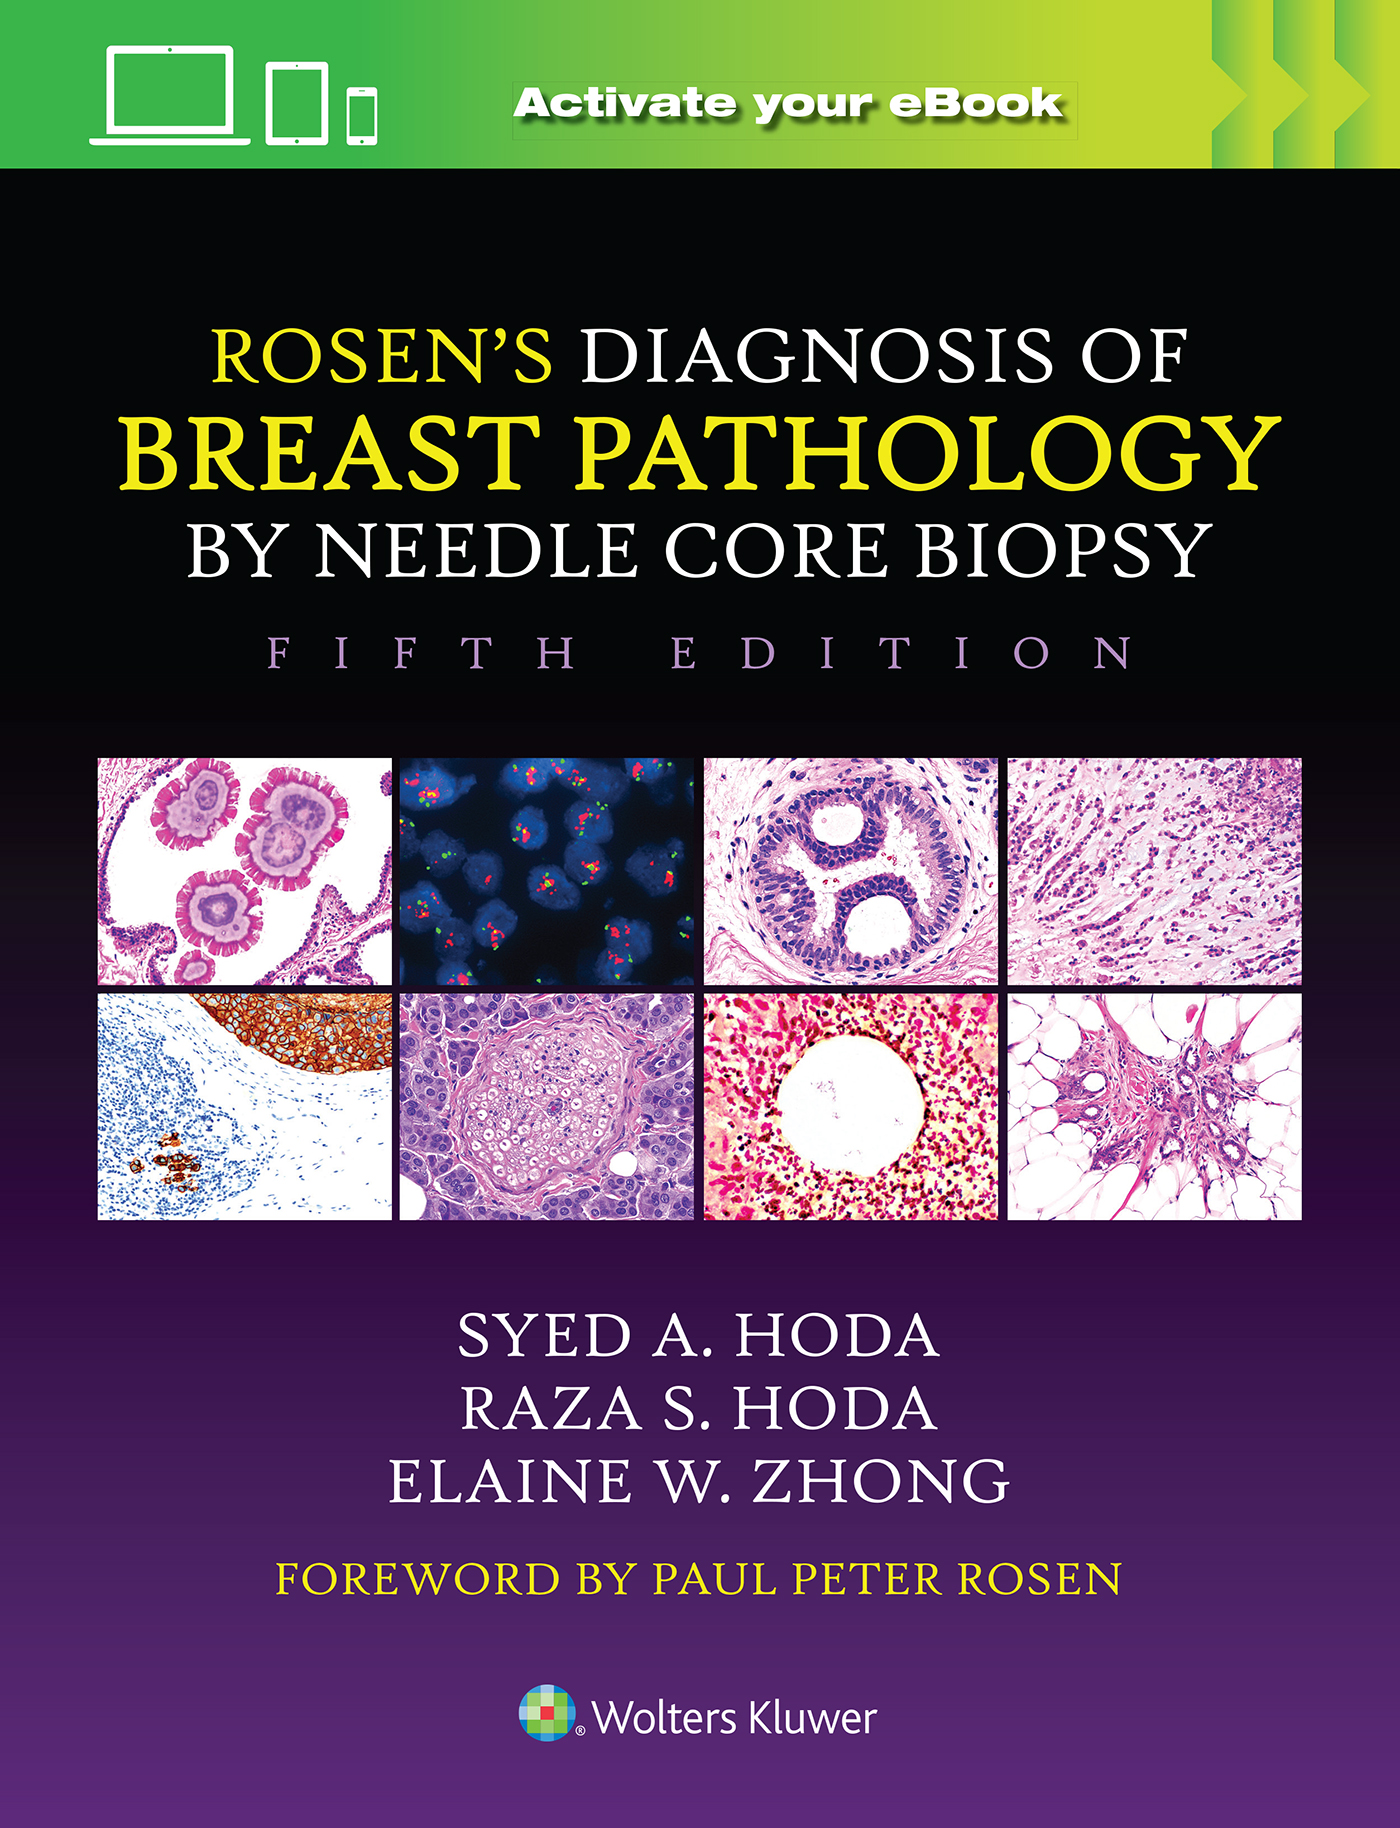 Rosen's Diagnosis of Breast Pathology by Needle CoreBiopsy, 5th ed.